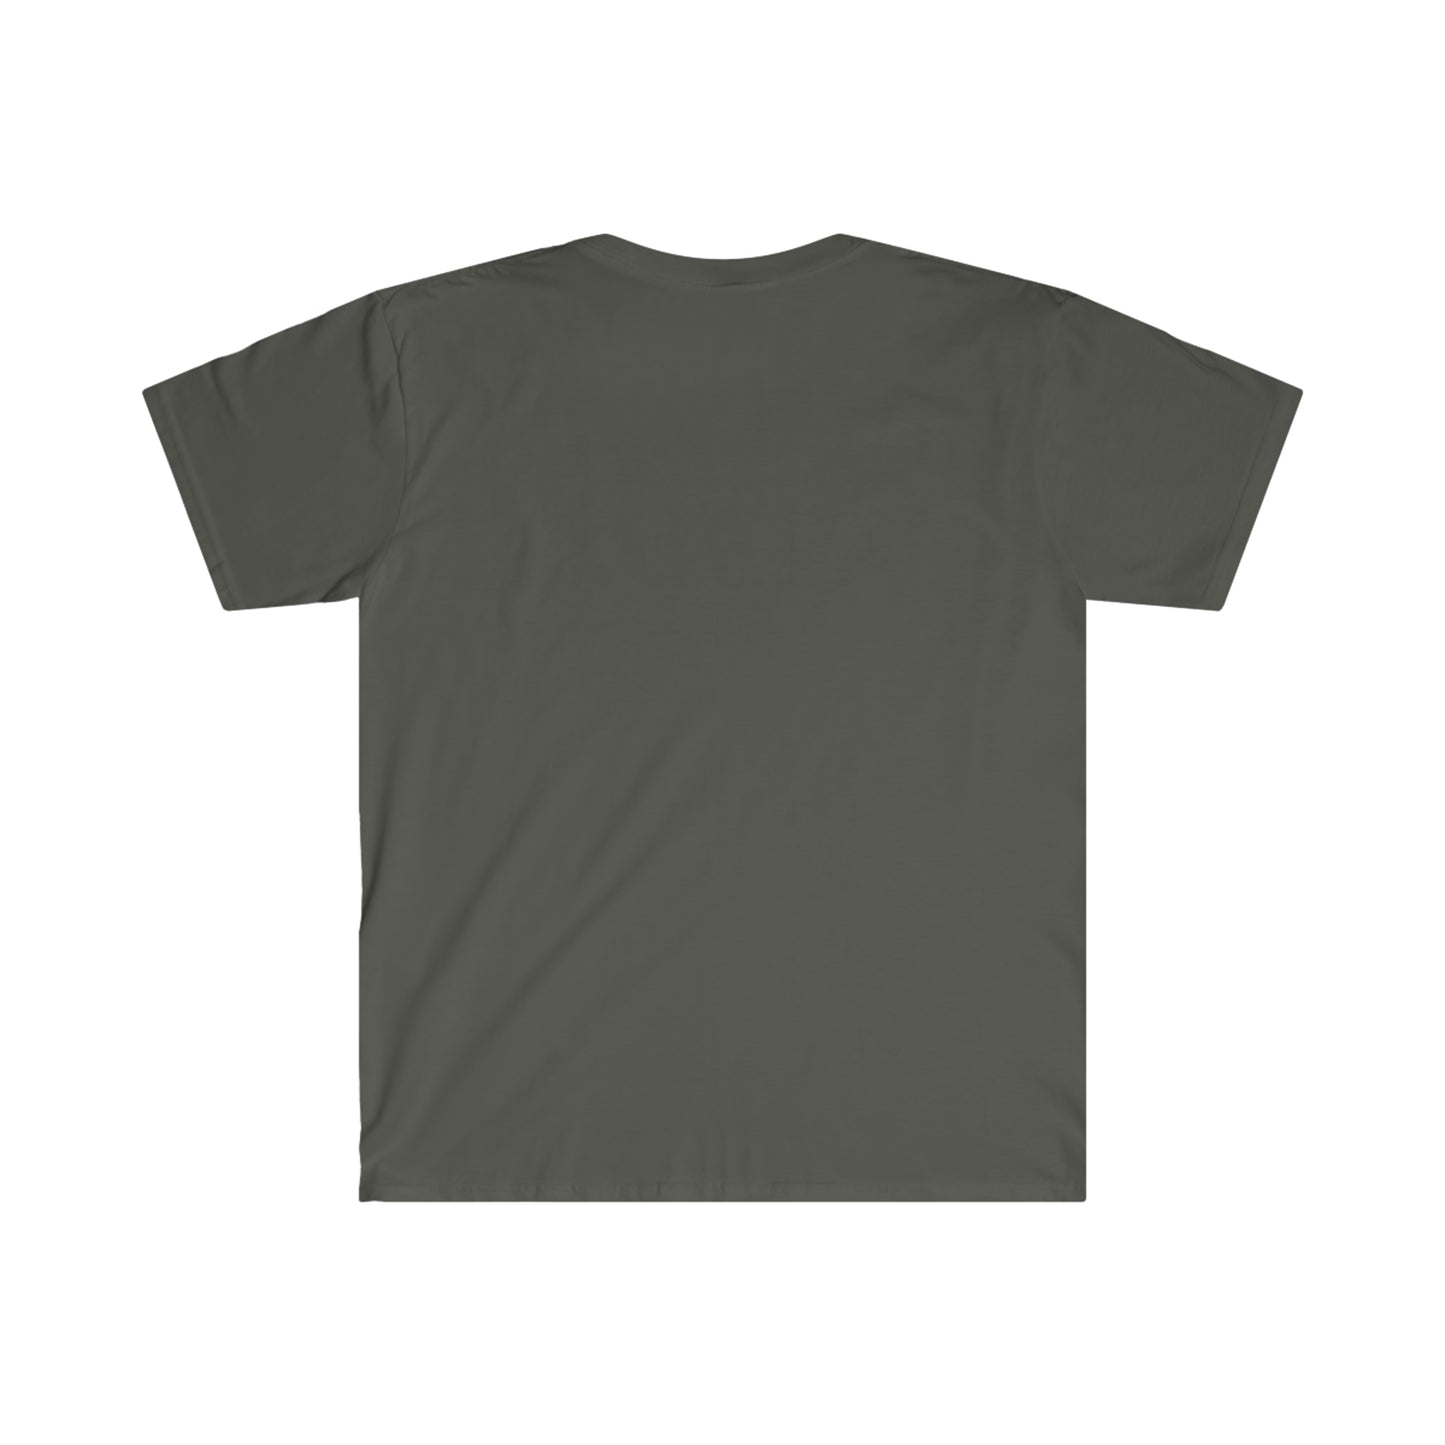 Simpatico Smoky Stripe - T-Shirt